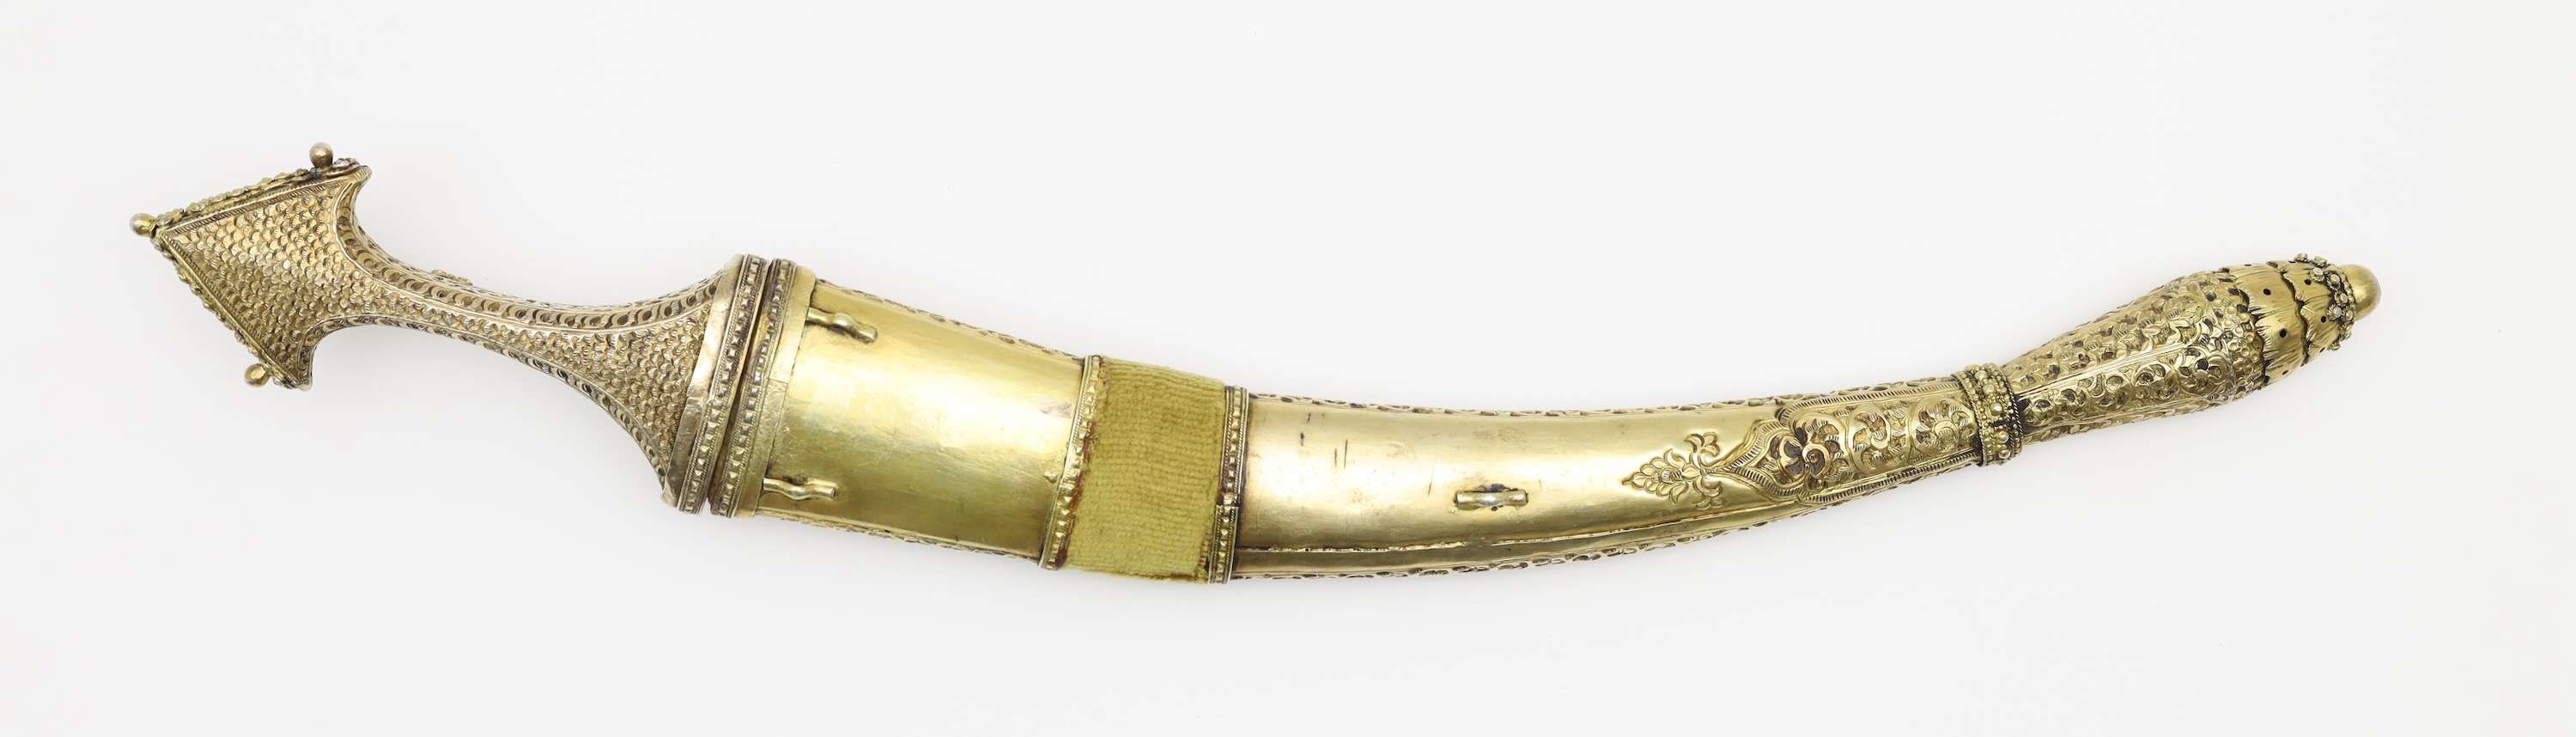 Ottoman made sabiki with silver gilt scabard and gold inlaid blade